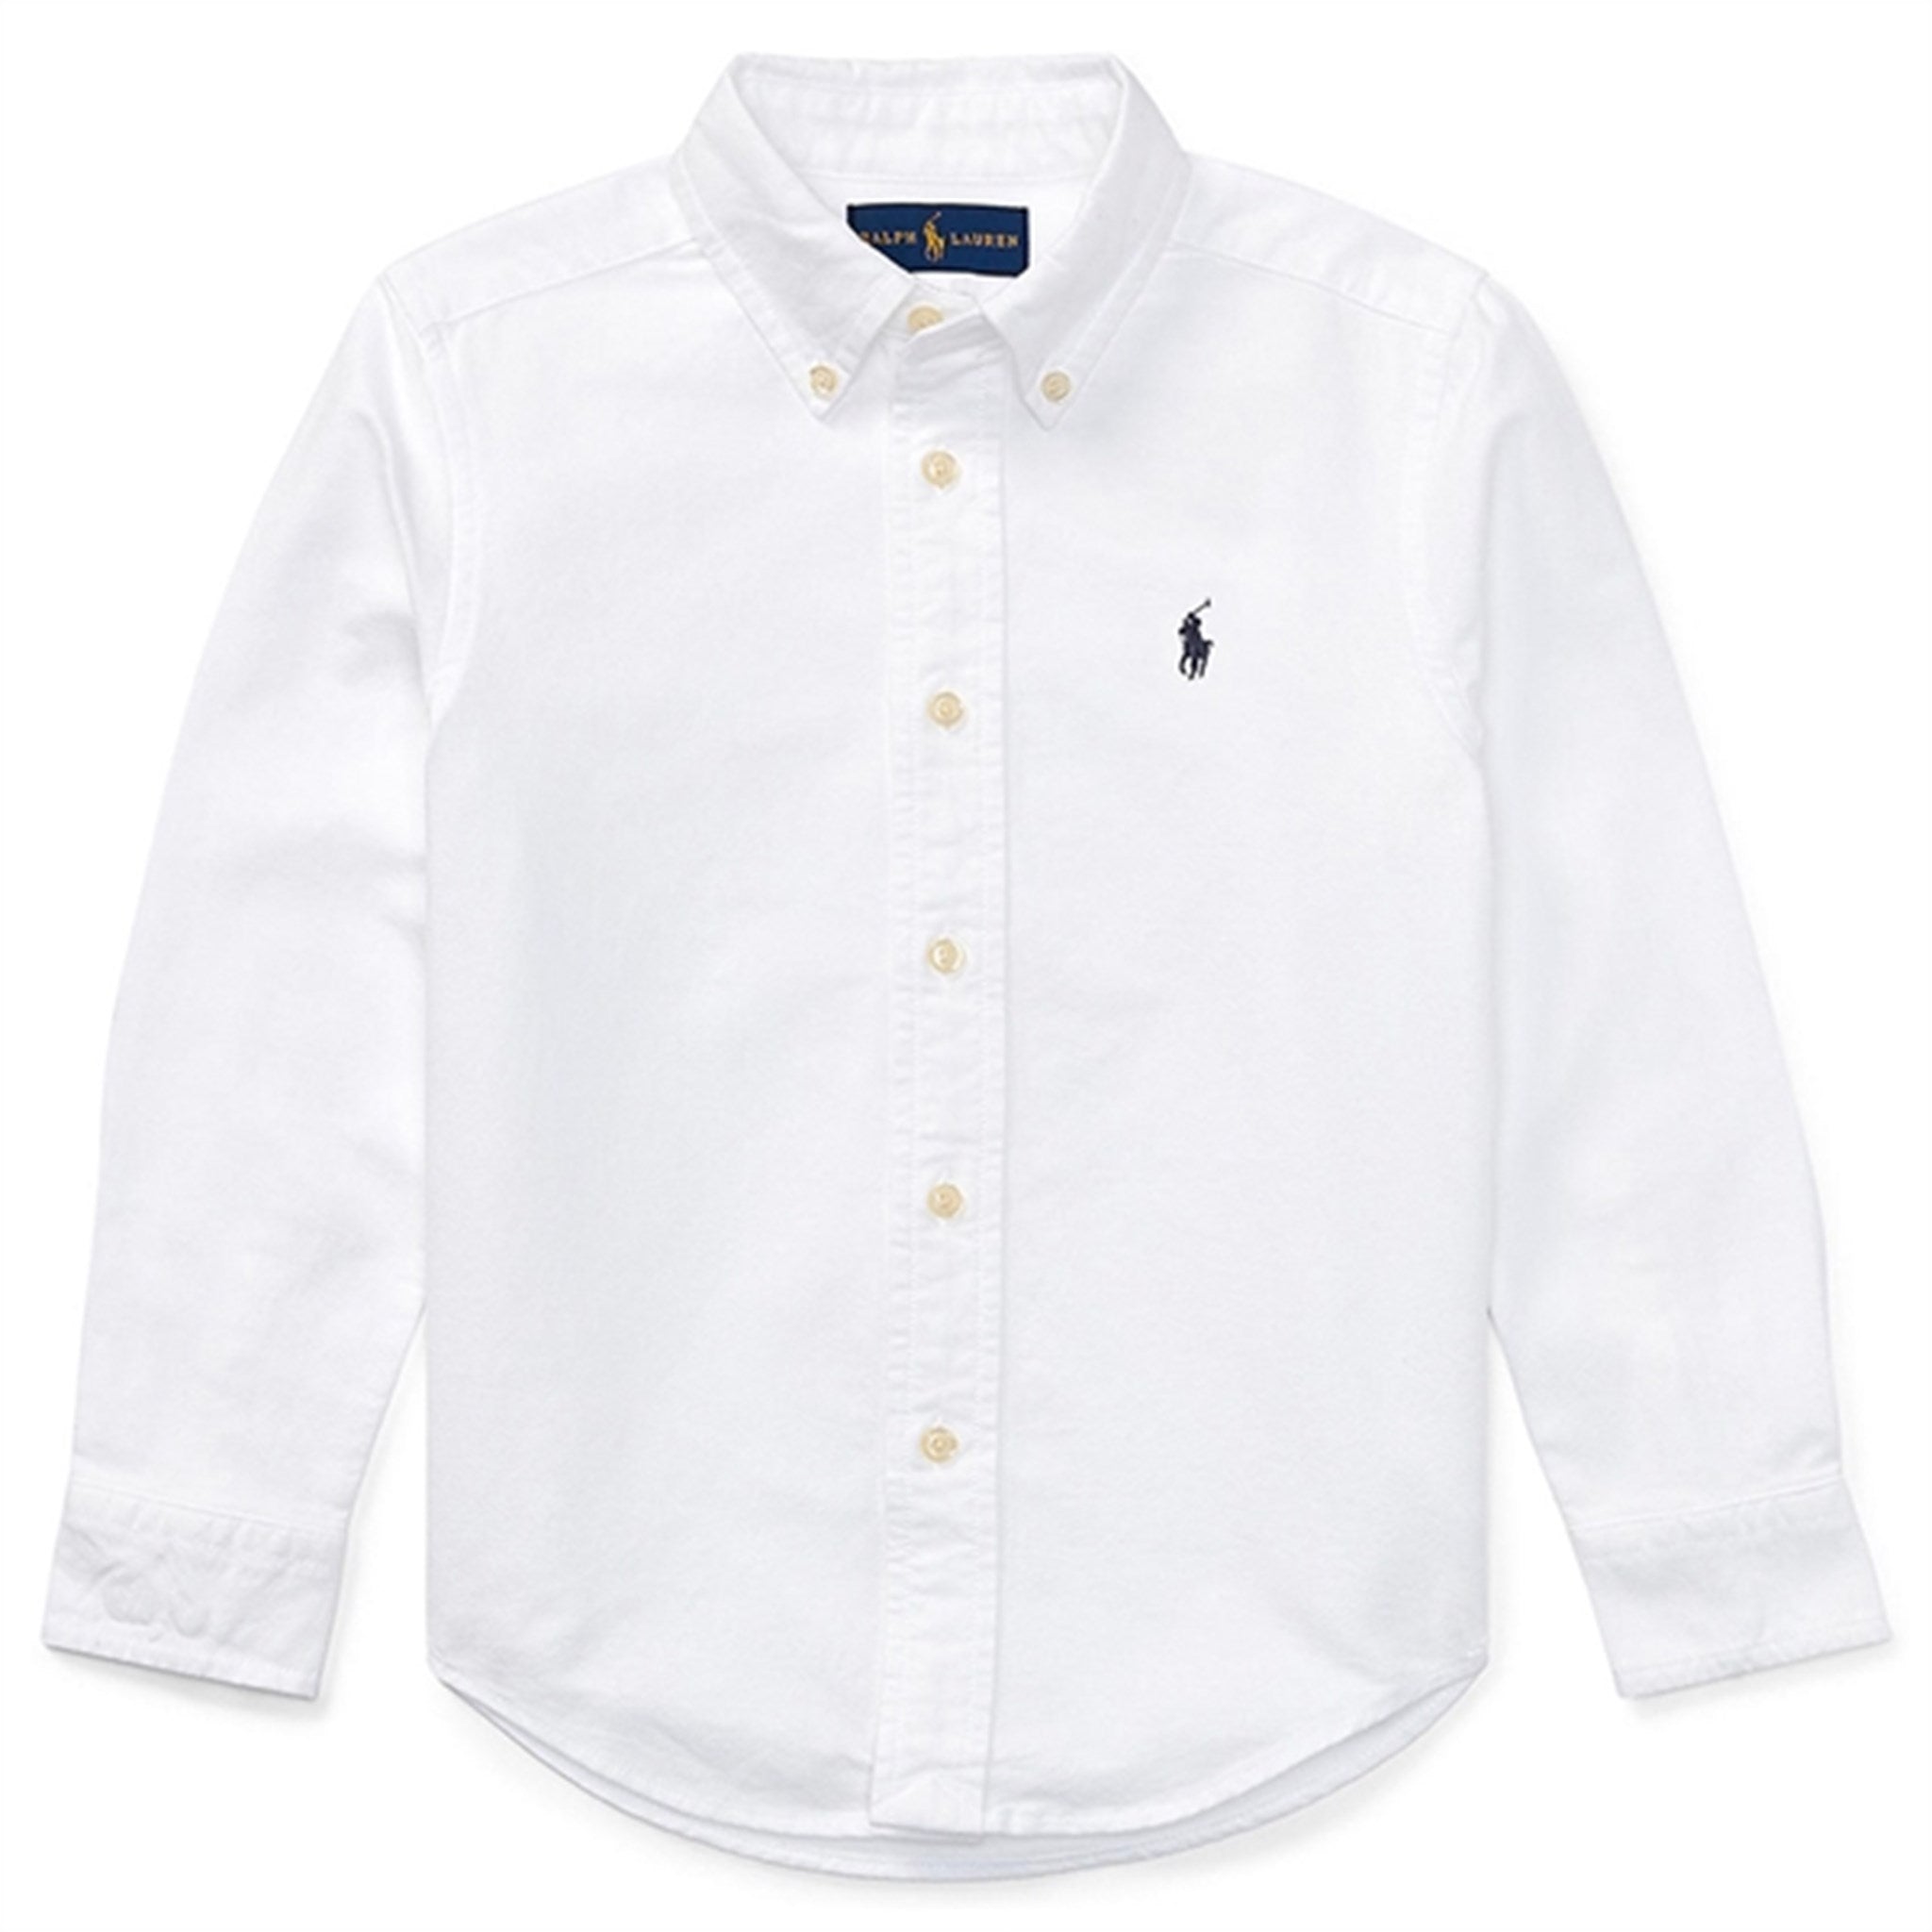 Ralph Lauren Baby Boy Long Sleeved Shirt White